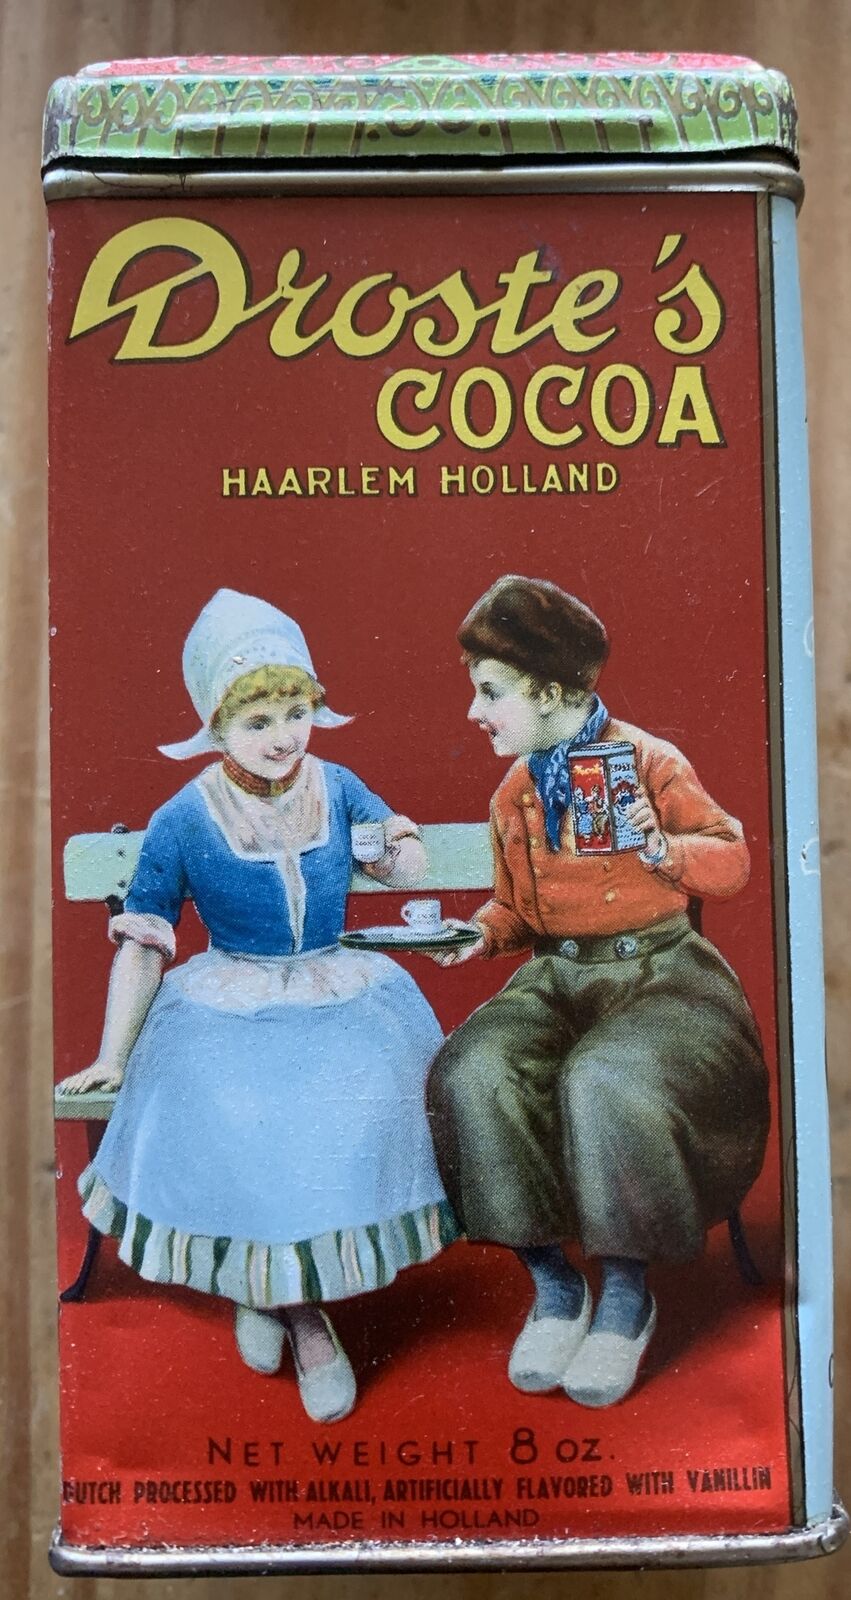 Antique 1920s Cocoa Tin Drostes Dutch Process Haarlem Holland—Terrific Shape 👀